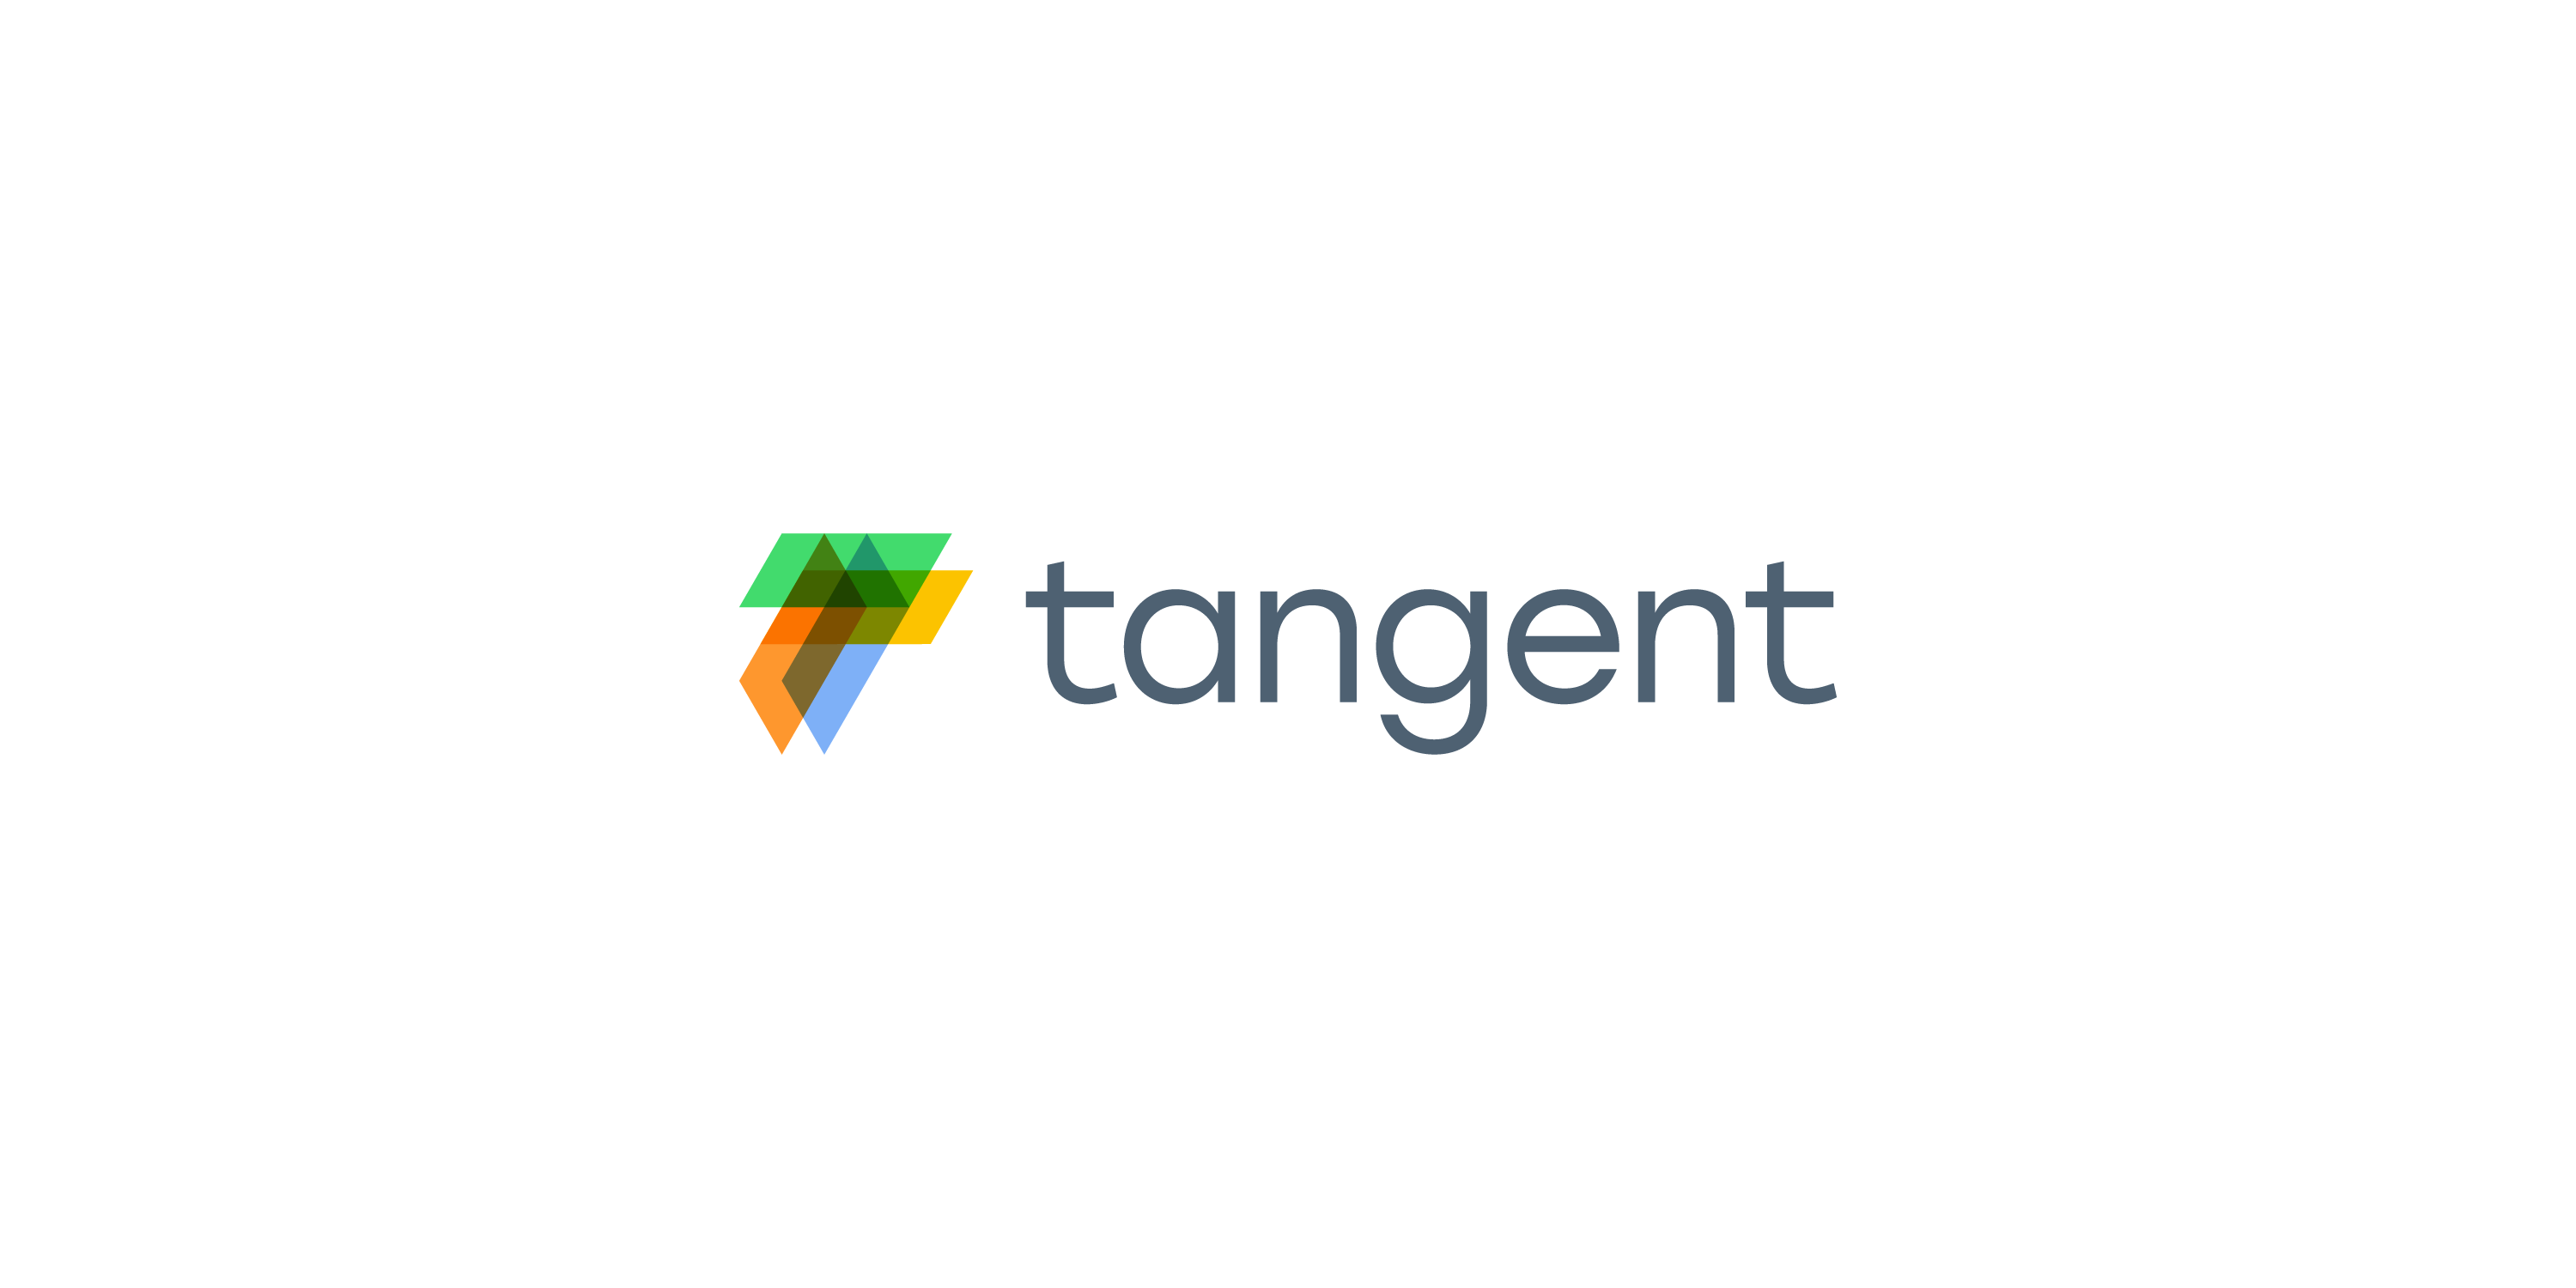 tangent-2-logo-by-brandforma